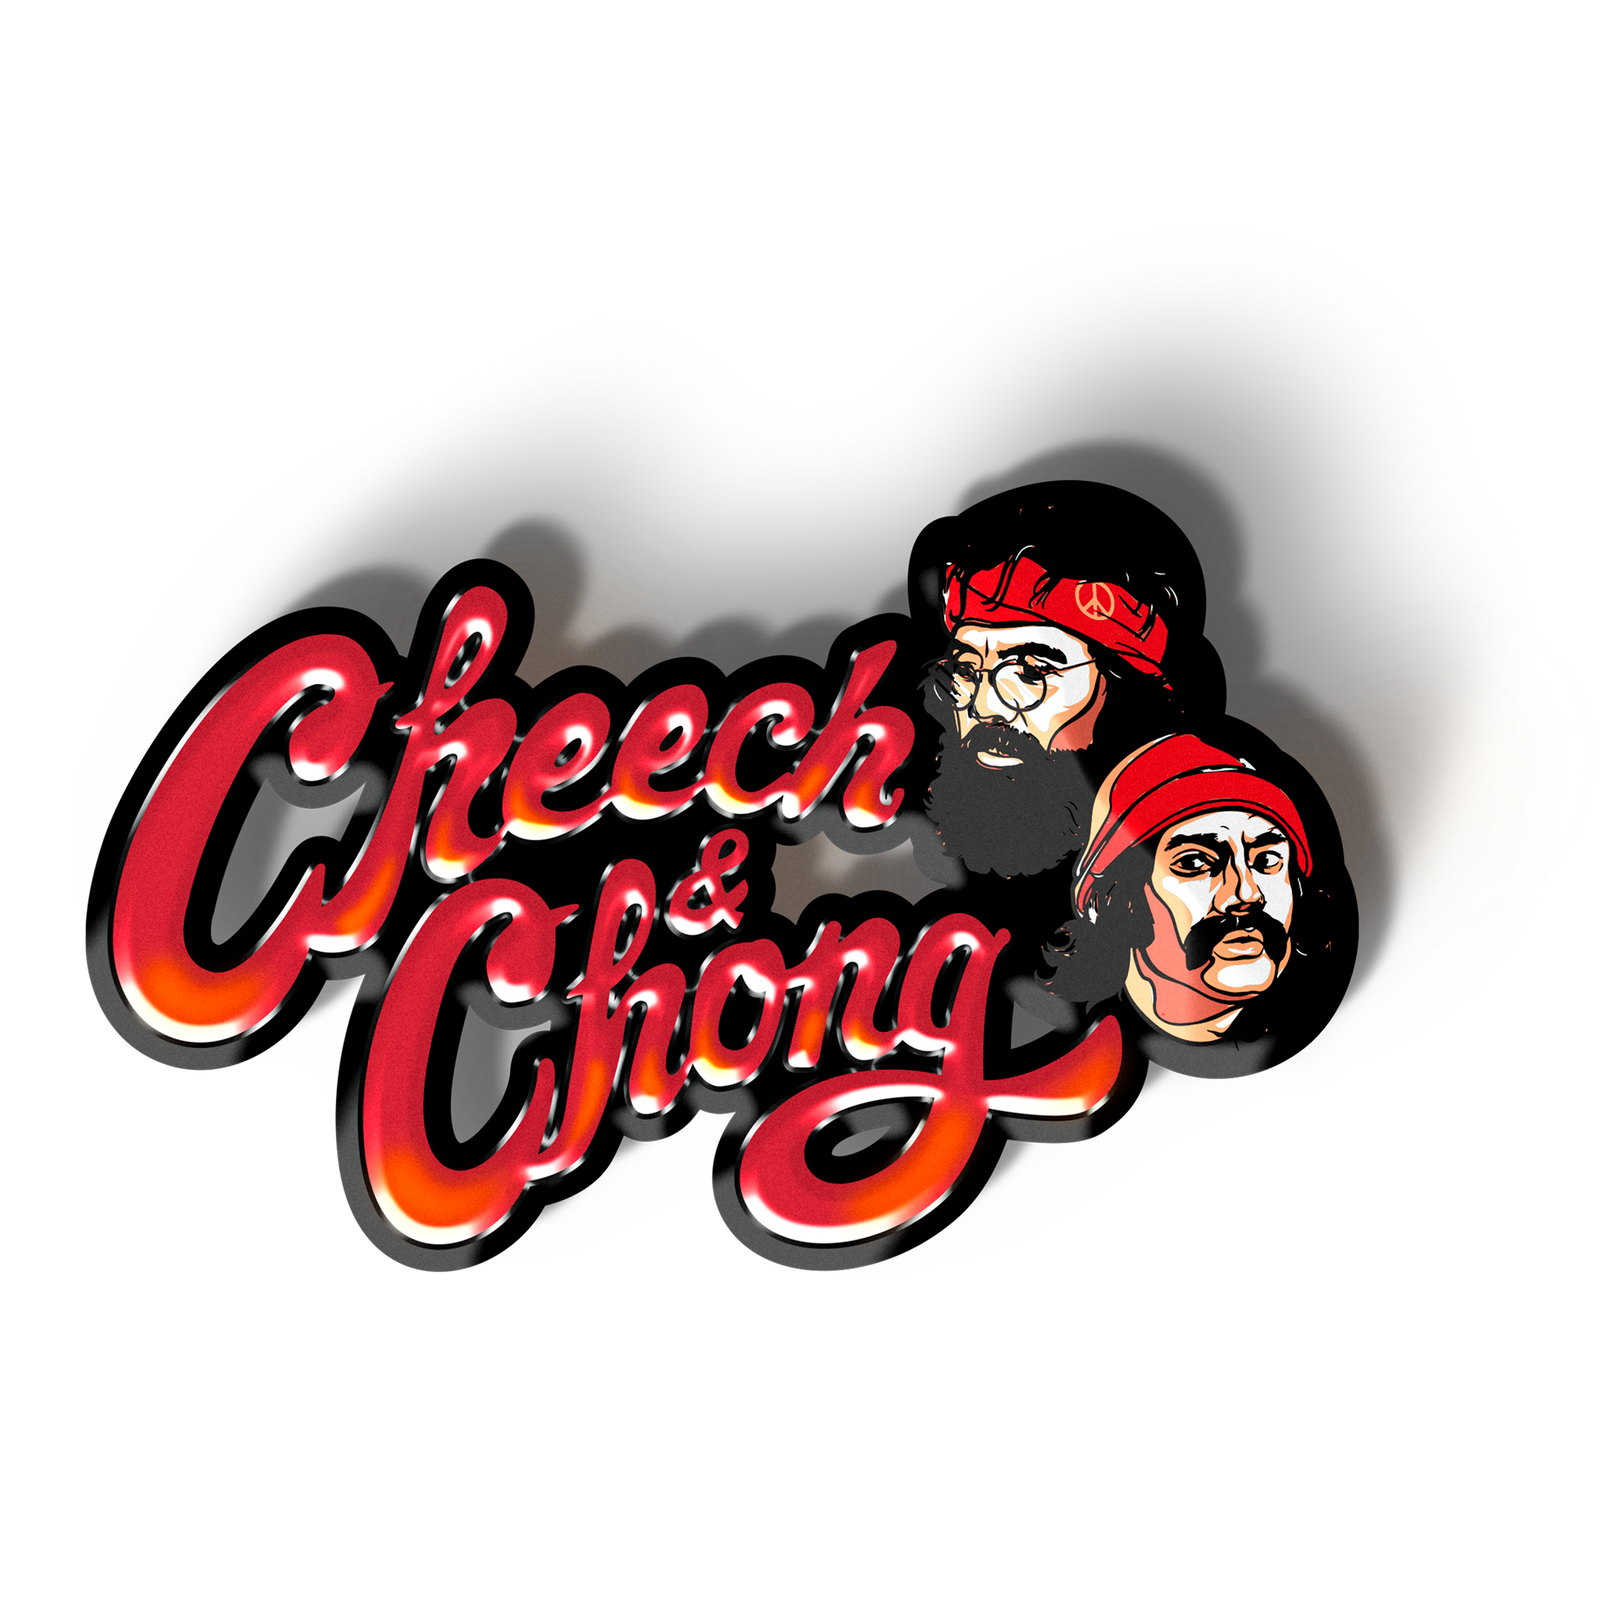 Cheech & Chong logo.